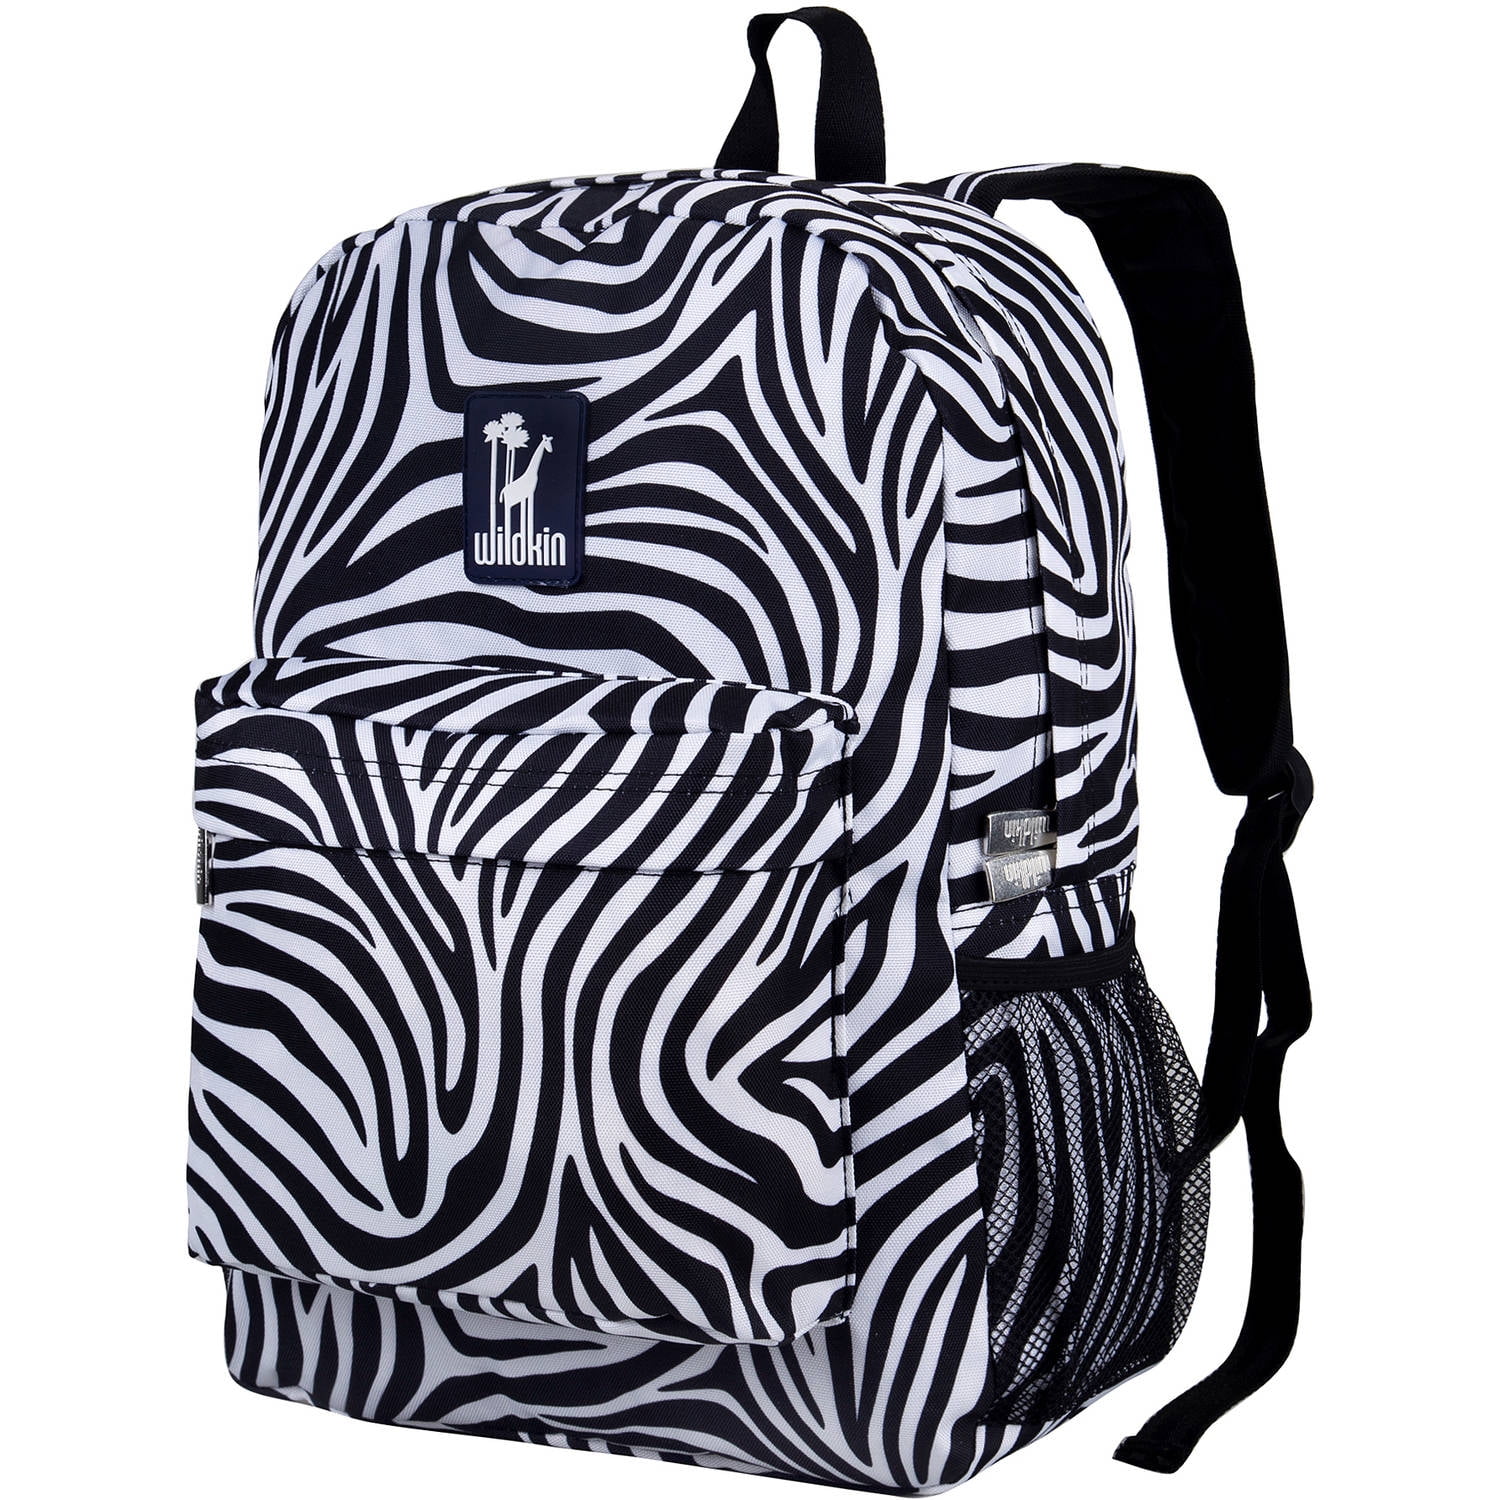 Wildkin Zebra 16 Inch Backpack - Walmart.com